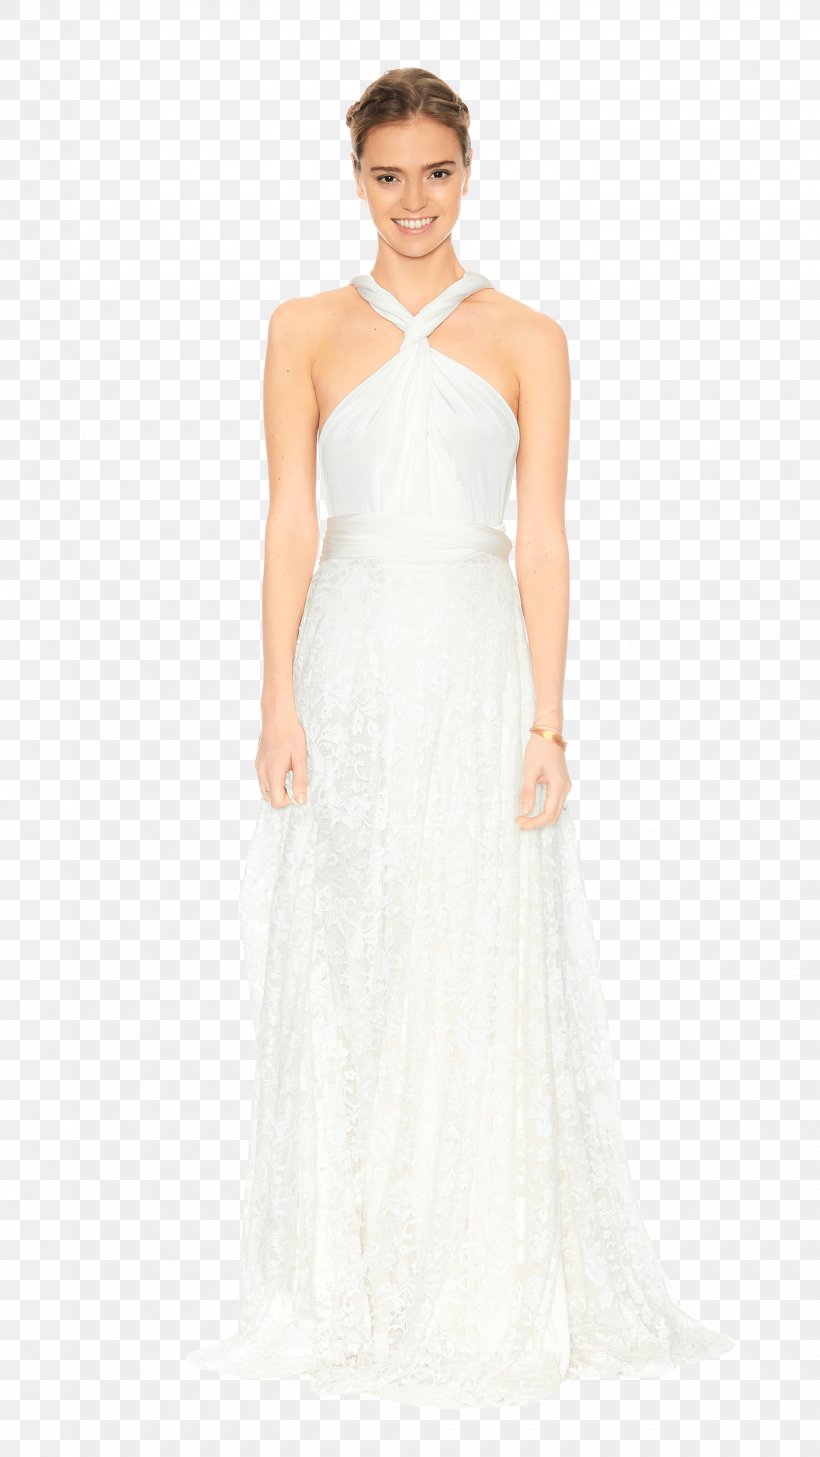 Wedding Dress Miniskirt Cocktail Dress, PNG, 1440x2560px, Wedding Dress, Bridal Accessory, Bridal Clothing, Bridal Party Dress, Casual Download Free